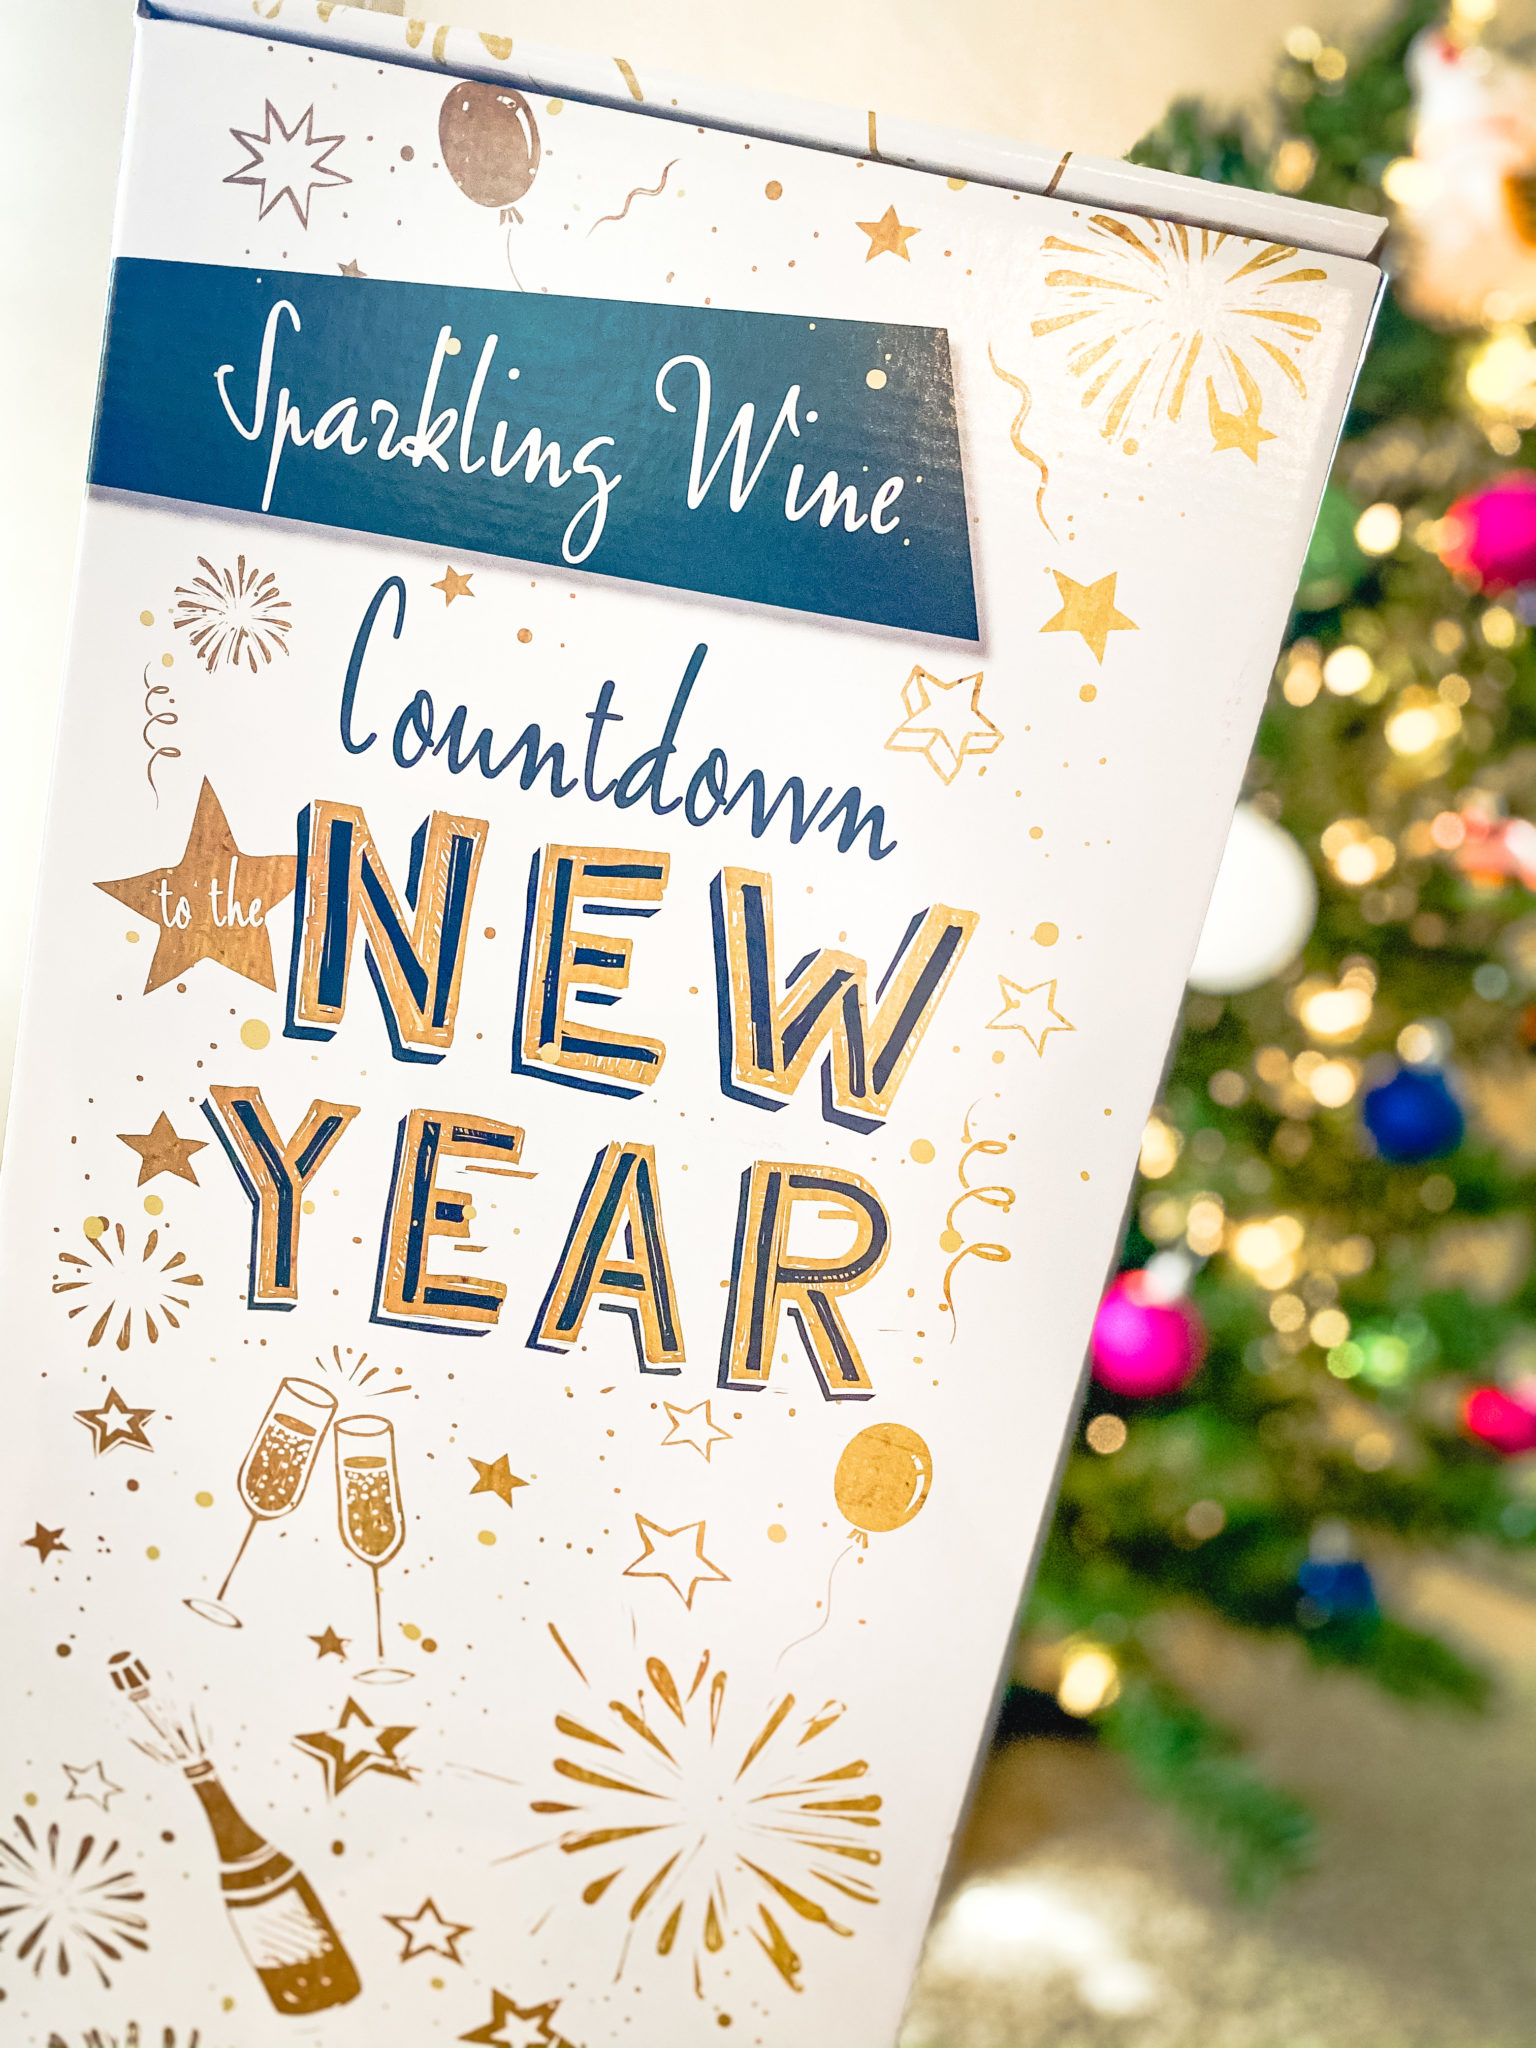 The Aldi Sparkling Wine Calendar Is Back for 2020!